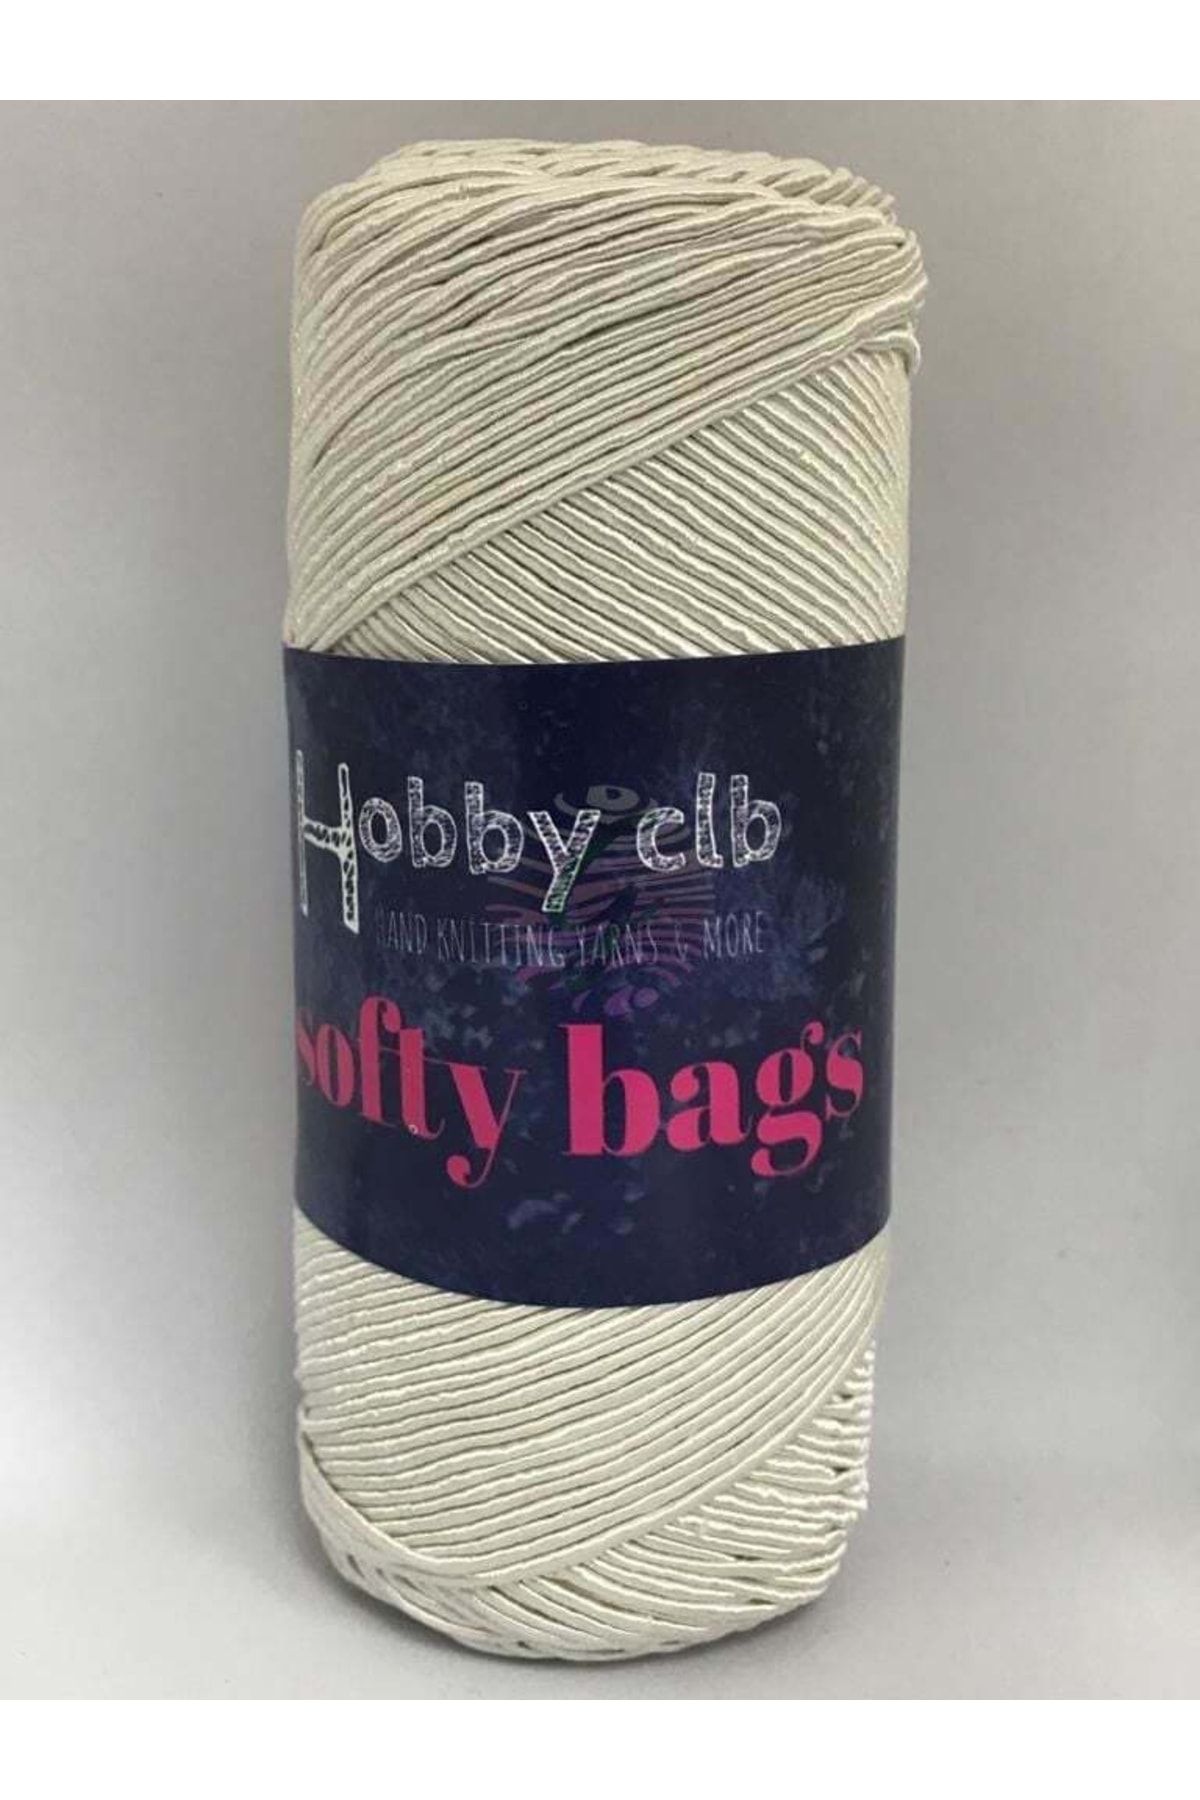 hobby club Softy Bags Supra Mumlu Ip Çanta Ipi 200 Gr.5 Adet (1kg) Krem